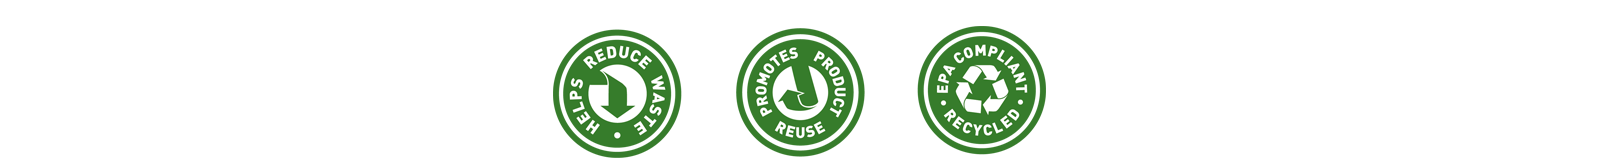 Georgia-Pacific Reduce, Reuse, Recycle Logos